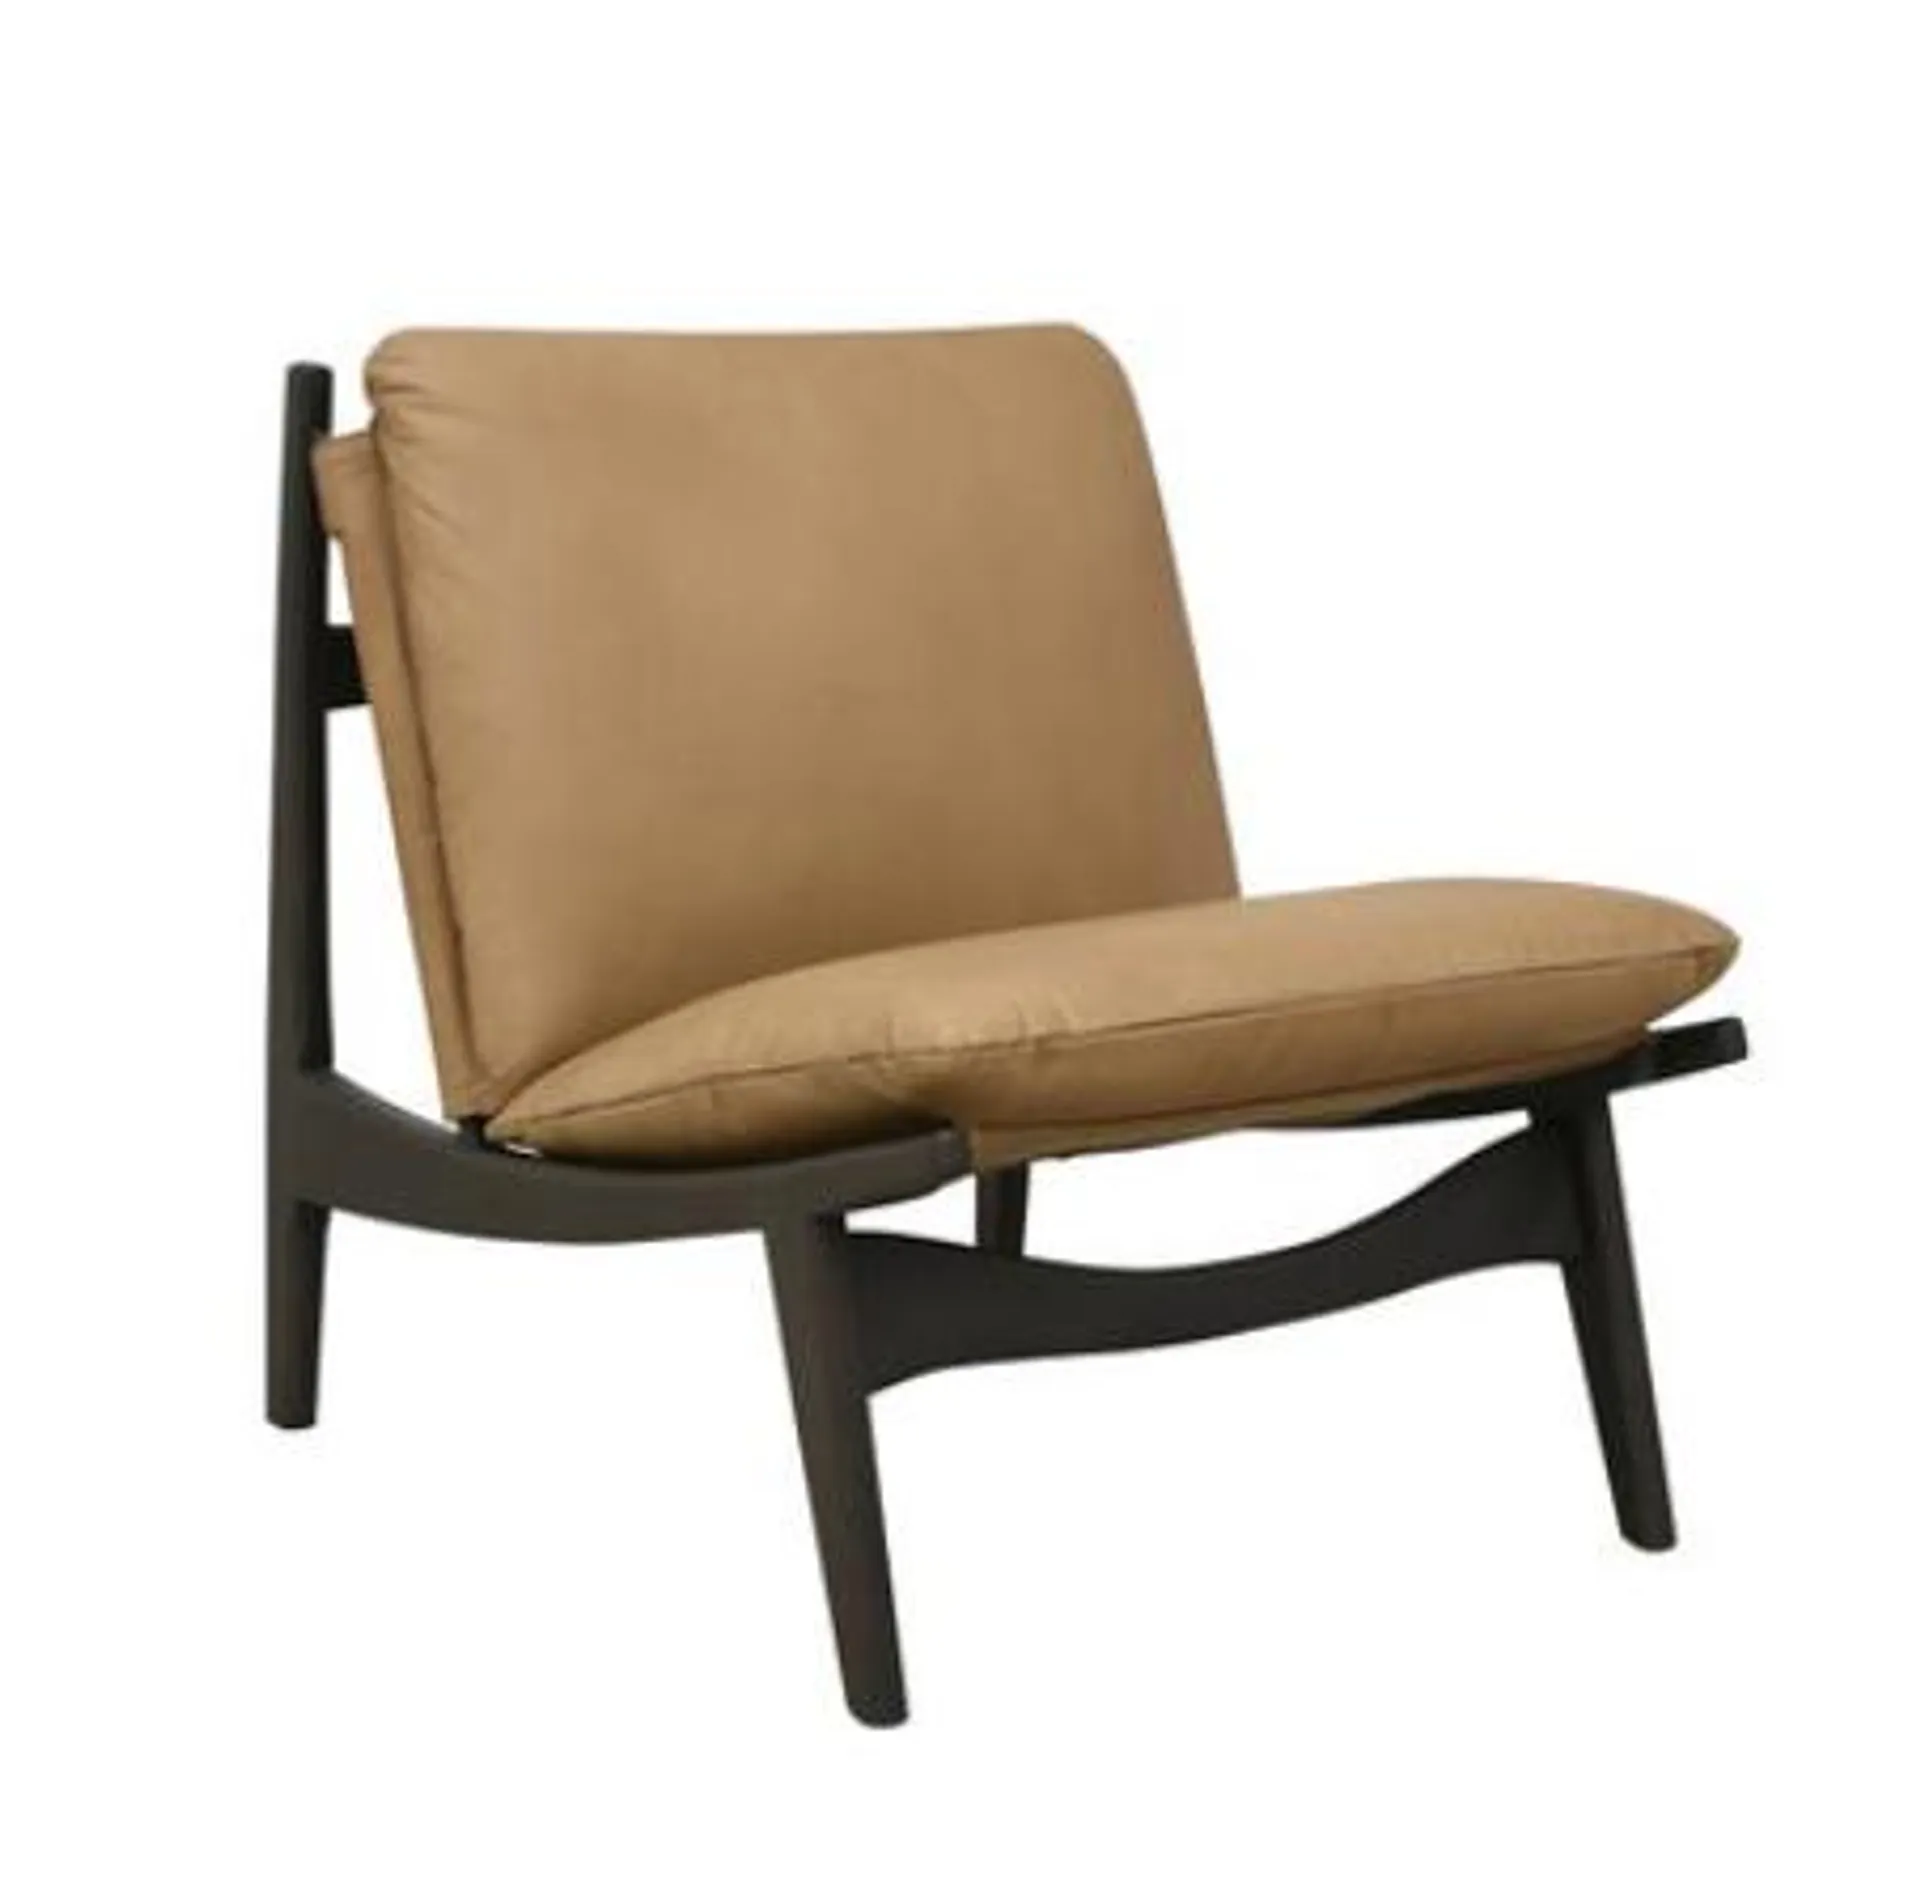 Alyson leather chair beige